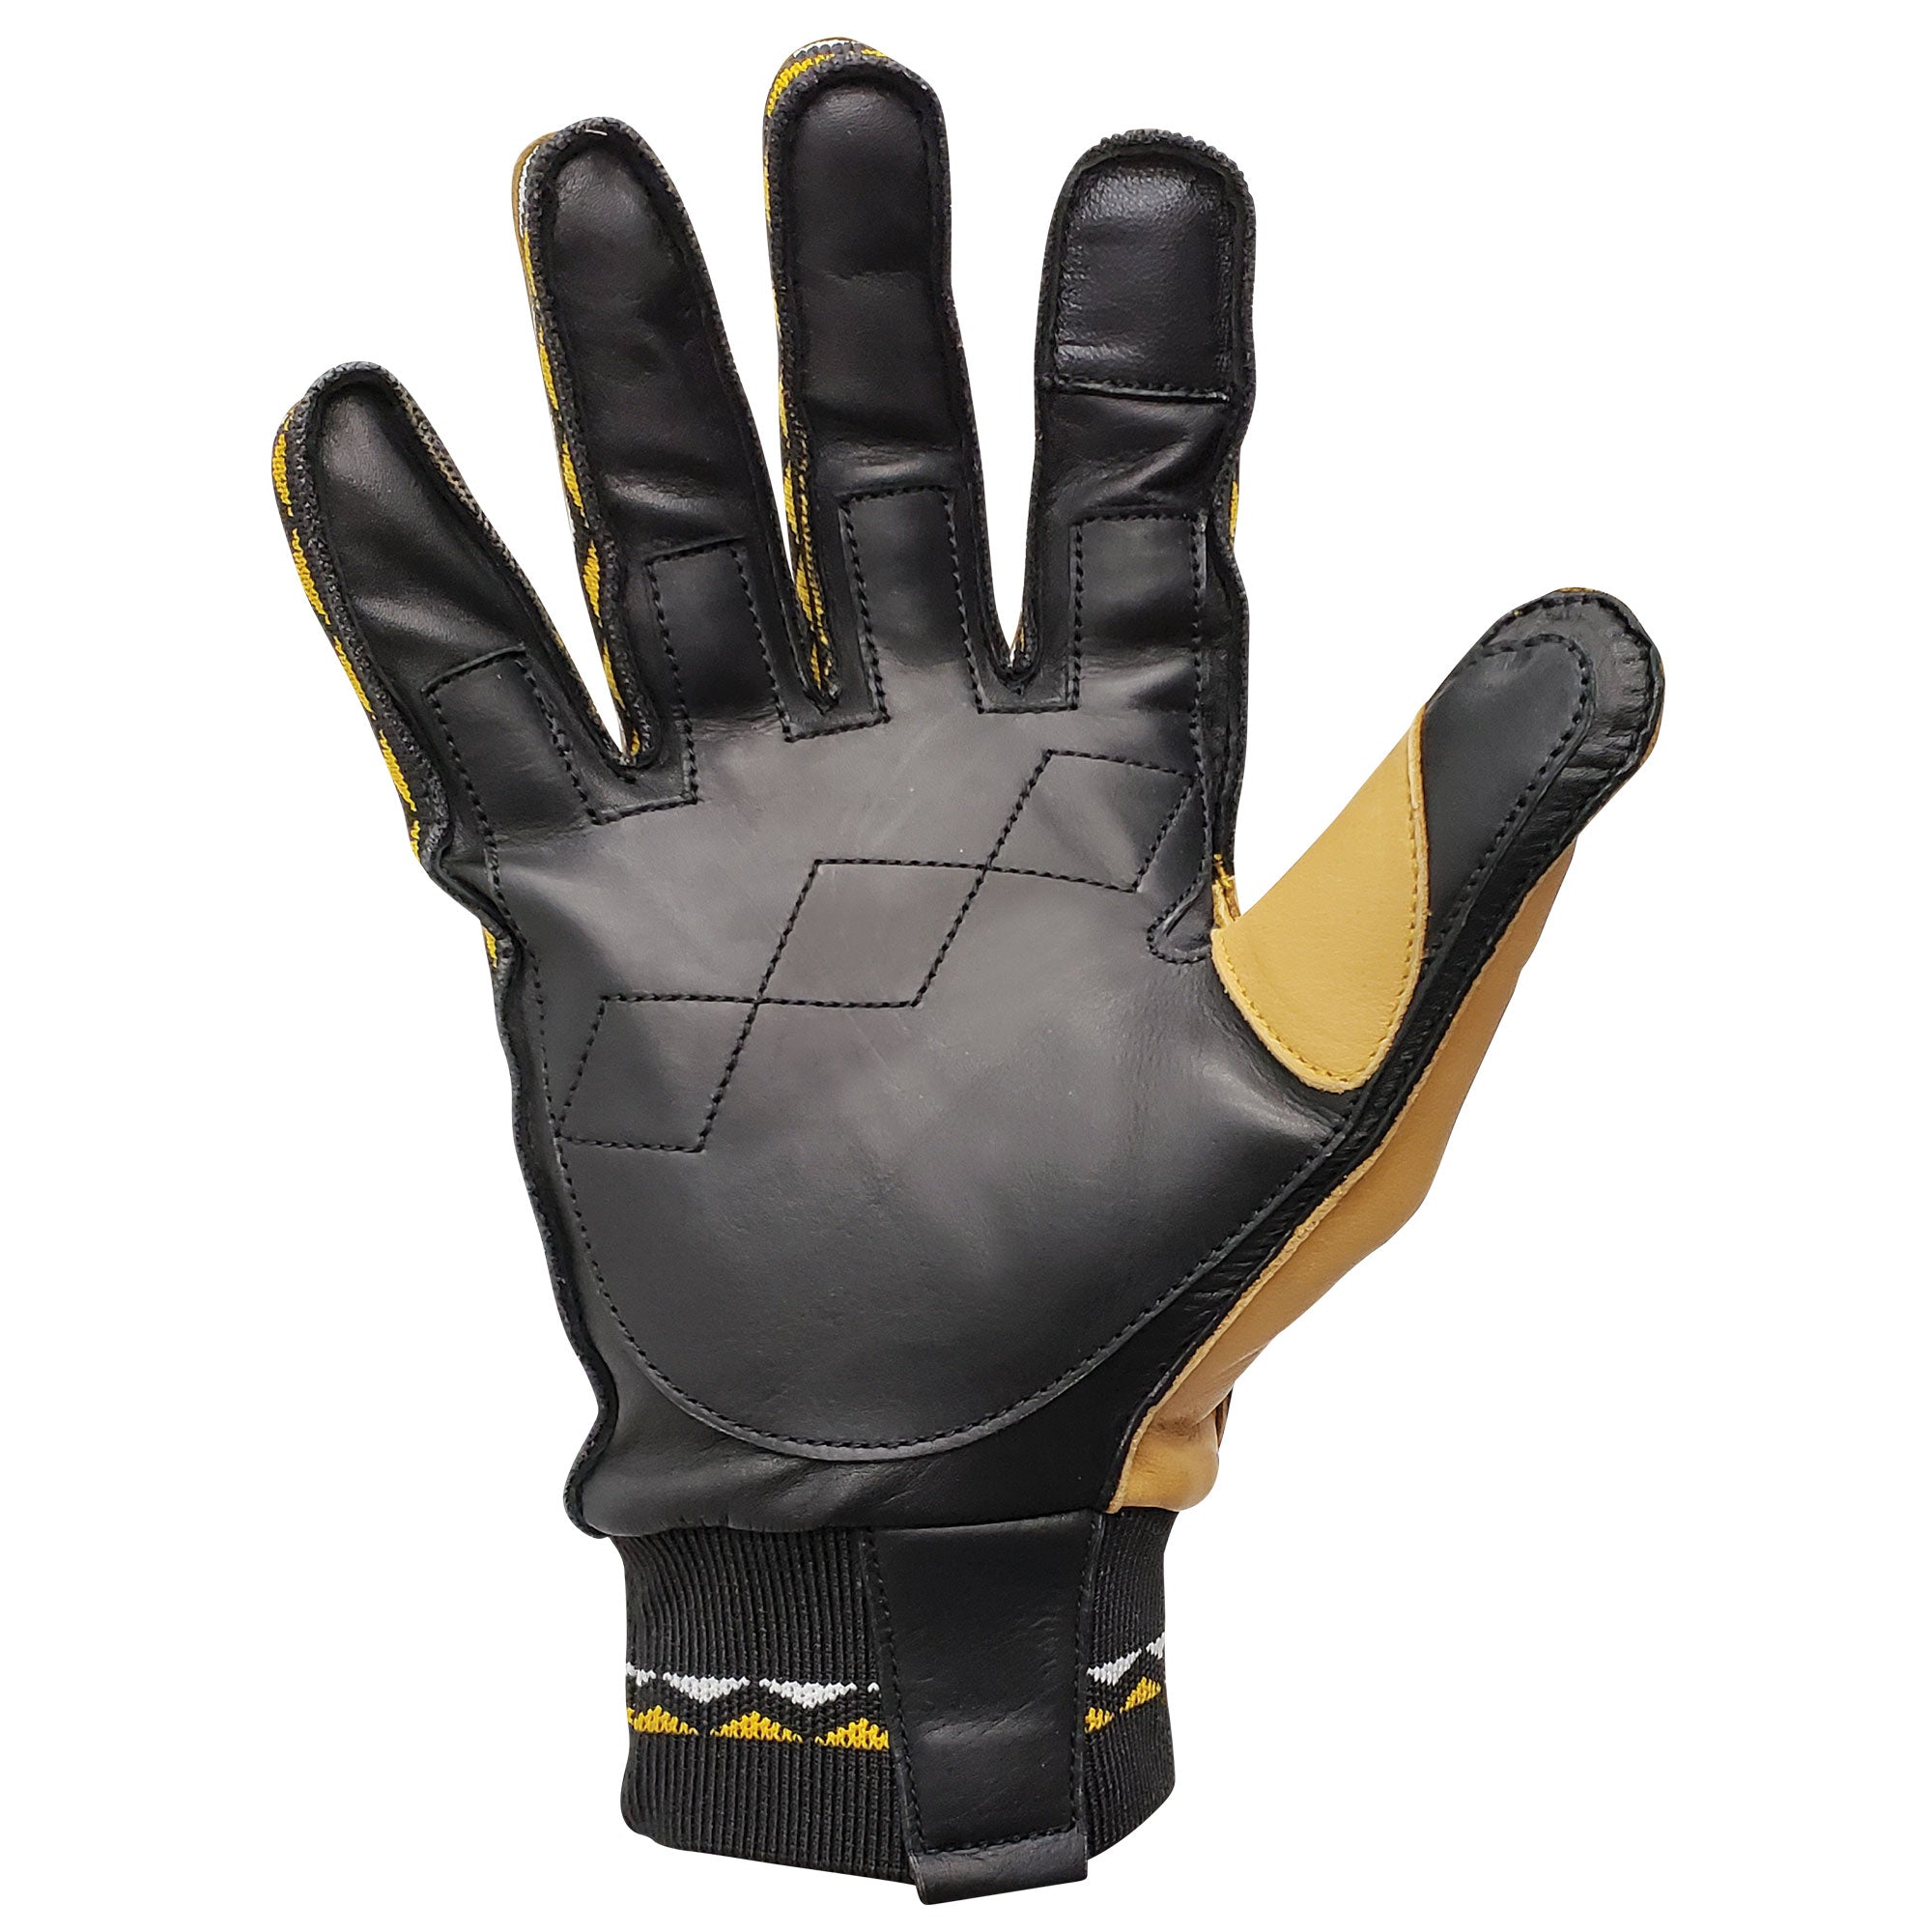 Tracker Glove - Tan